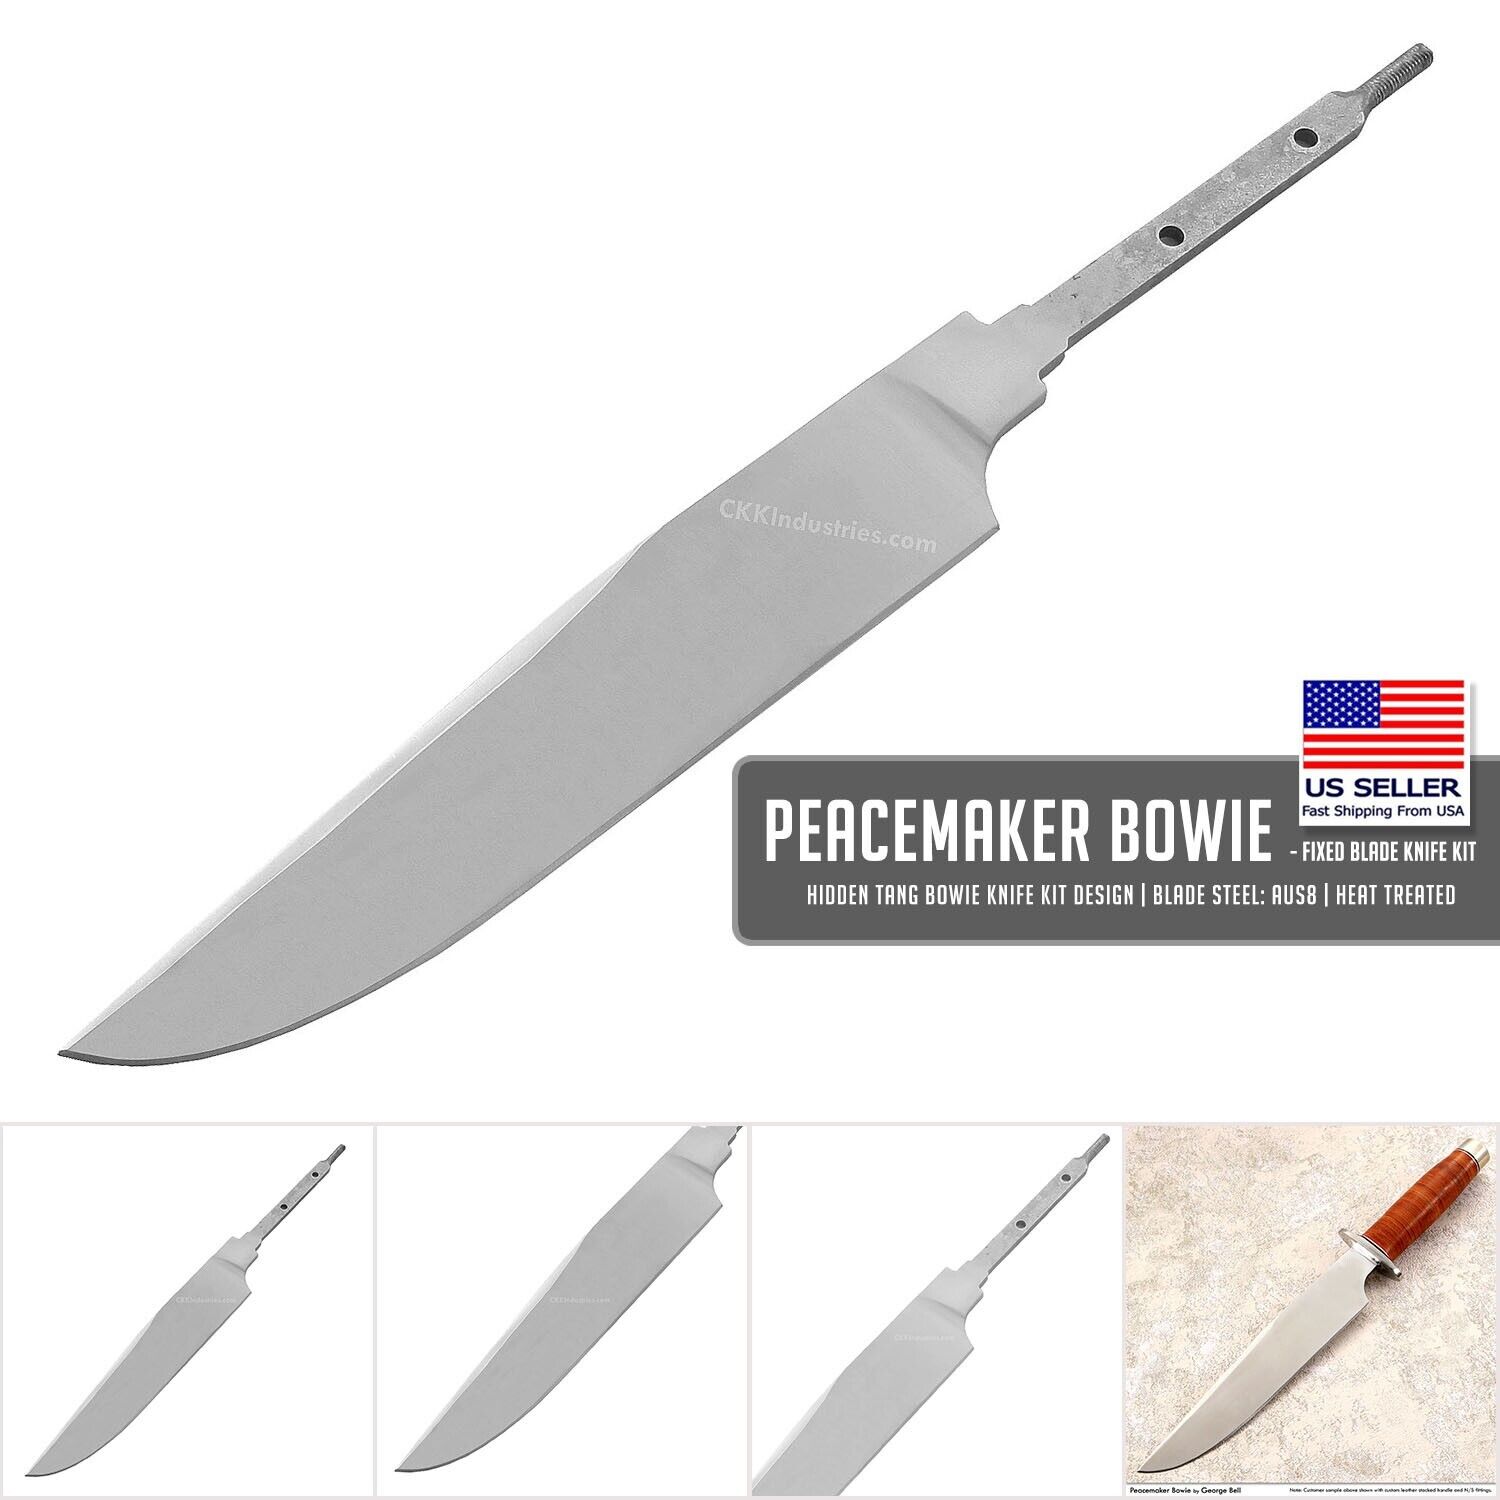 PEACEMAKER BOWIE - DIY Knife Making Kit - USA Design